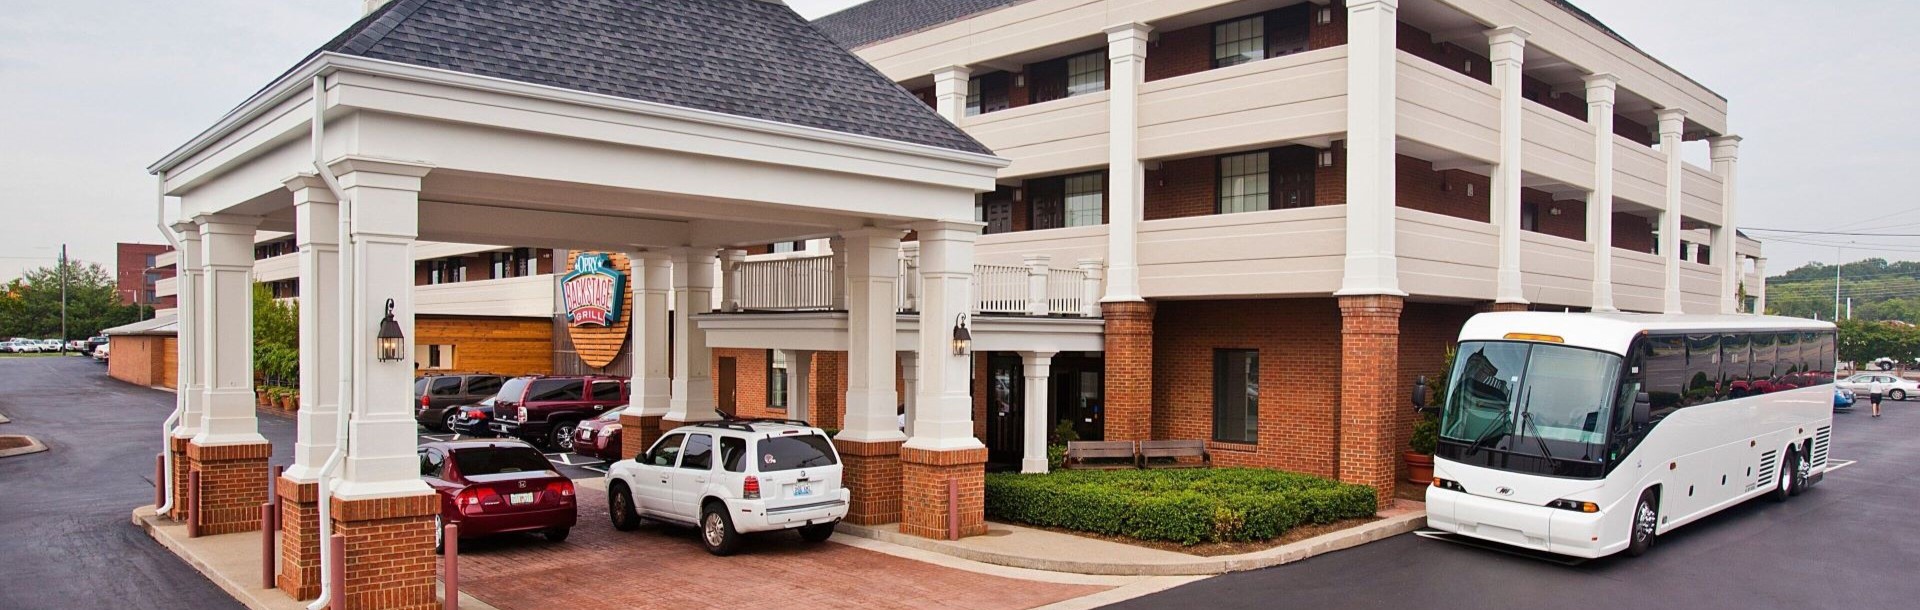 The Inn at Opryland, A Gaylord Hotel, Nashville